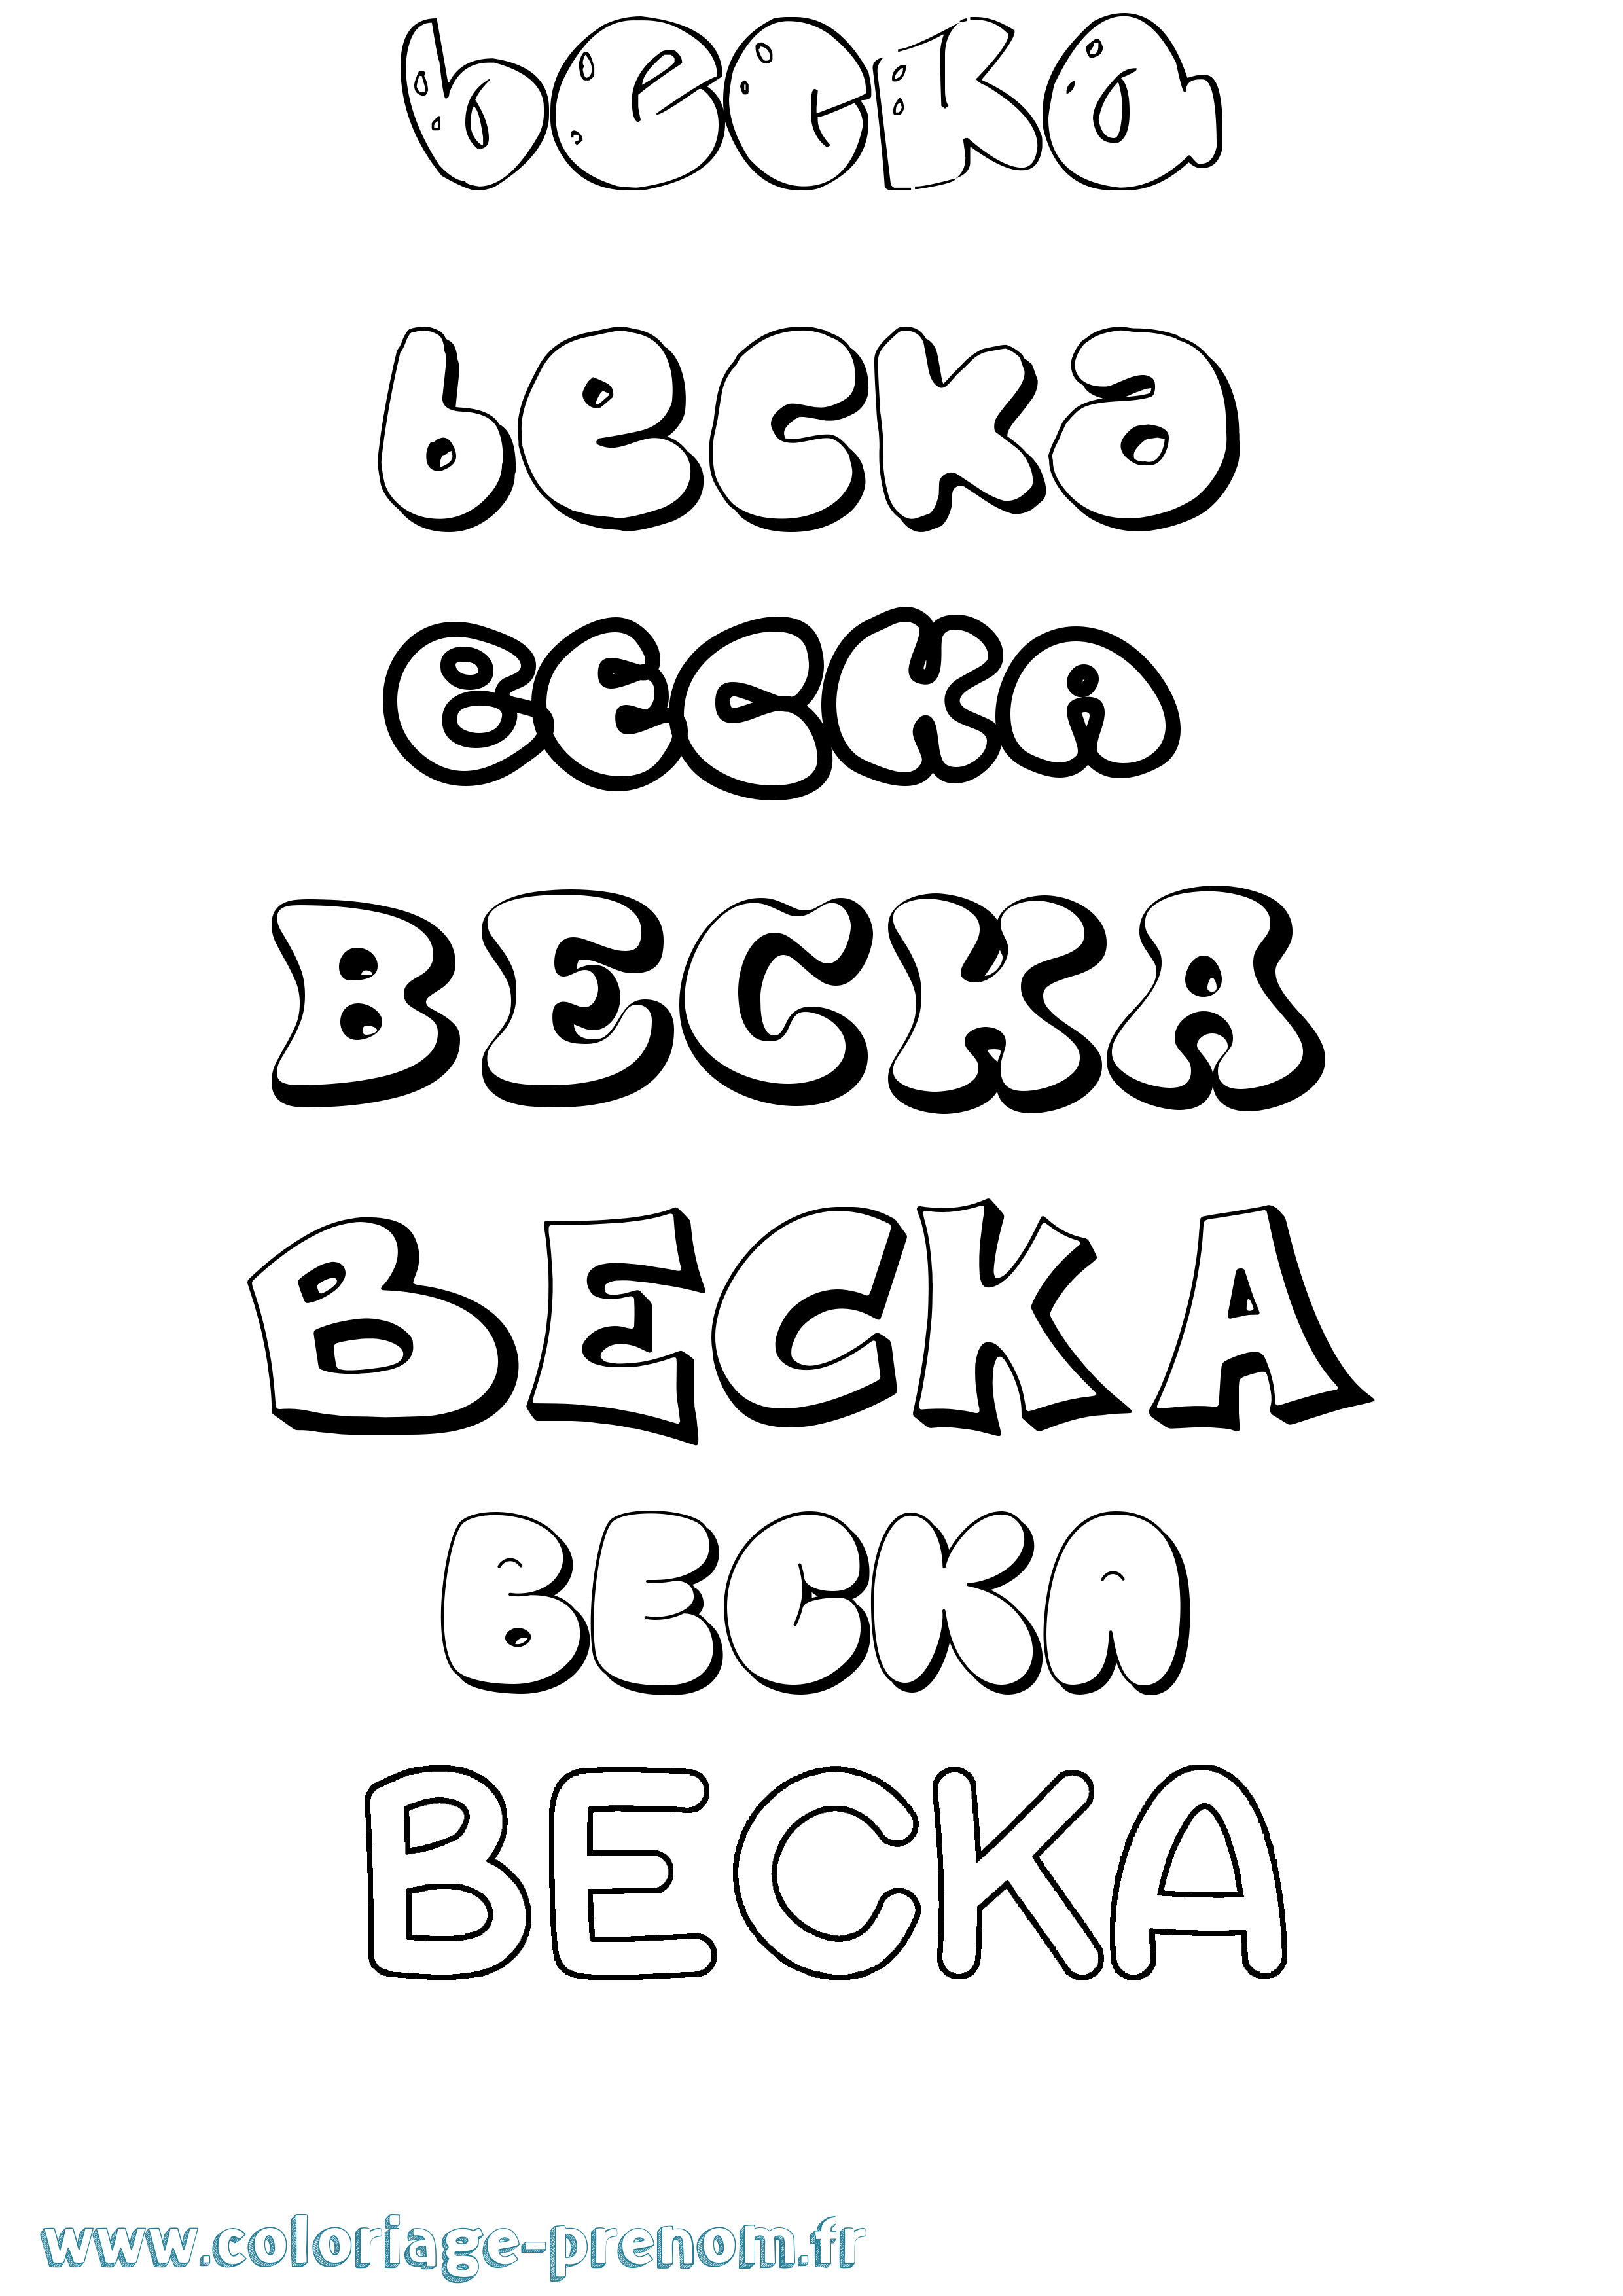 Coloriage prénom Becka Bubble